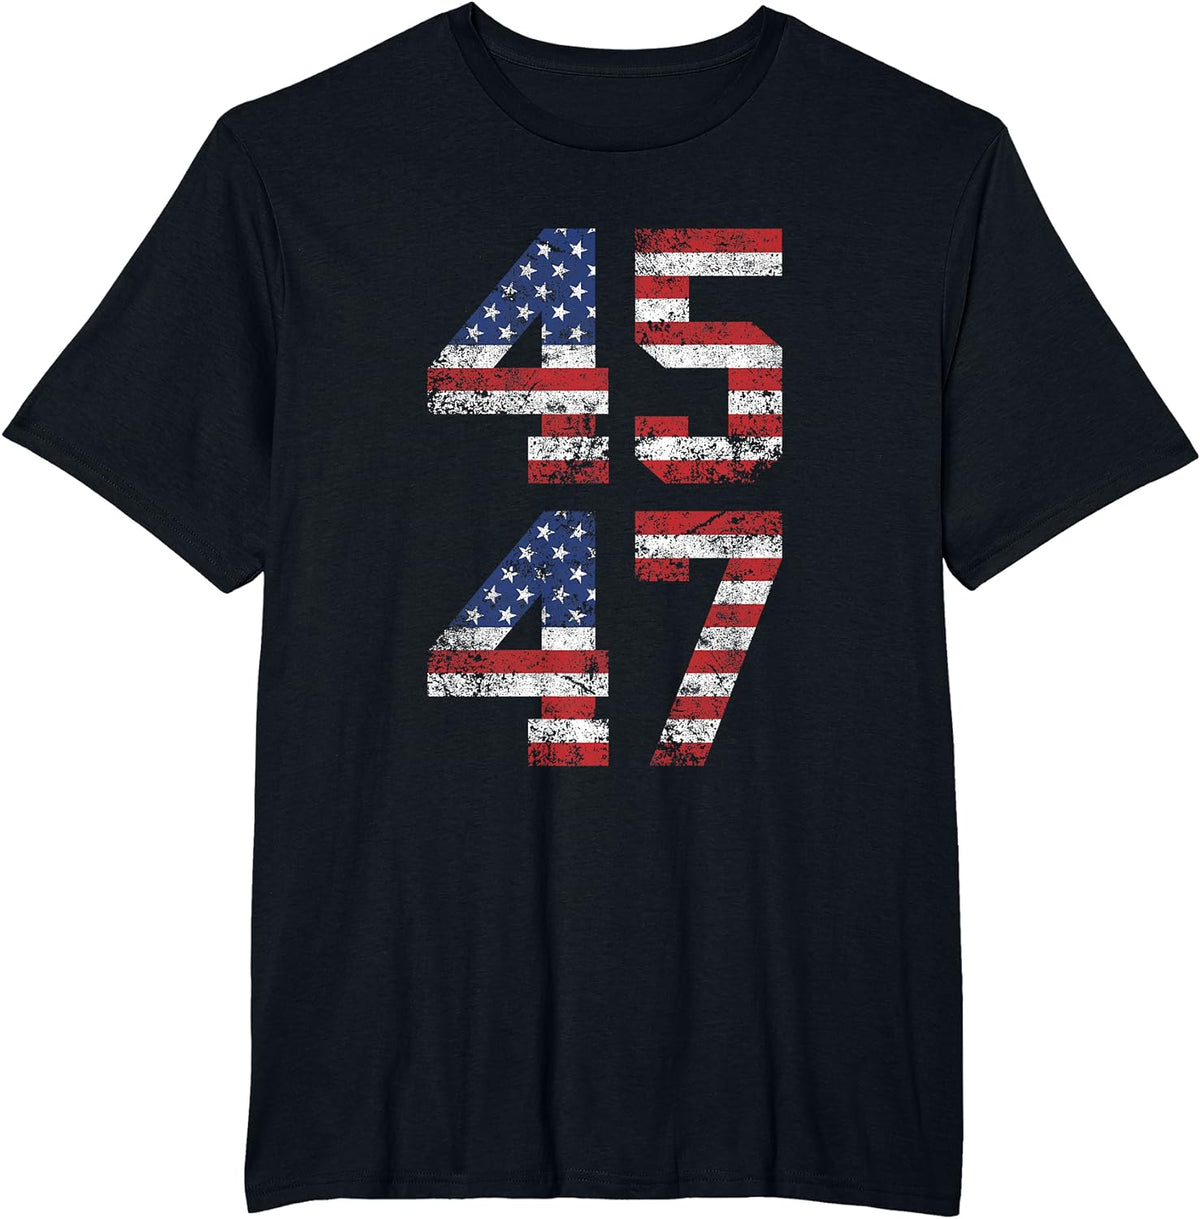 Trump 2024 Vintage T-Shirt - Classic Fit, Crew Neck, Black Adult